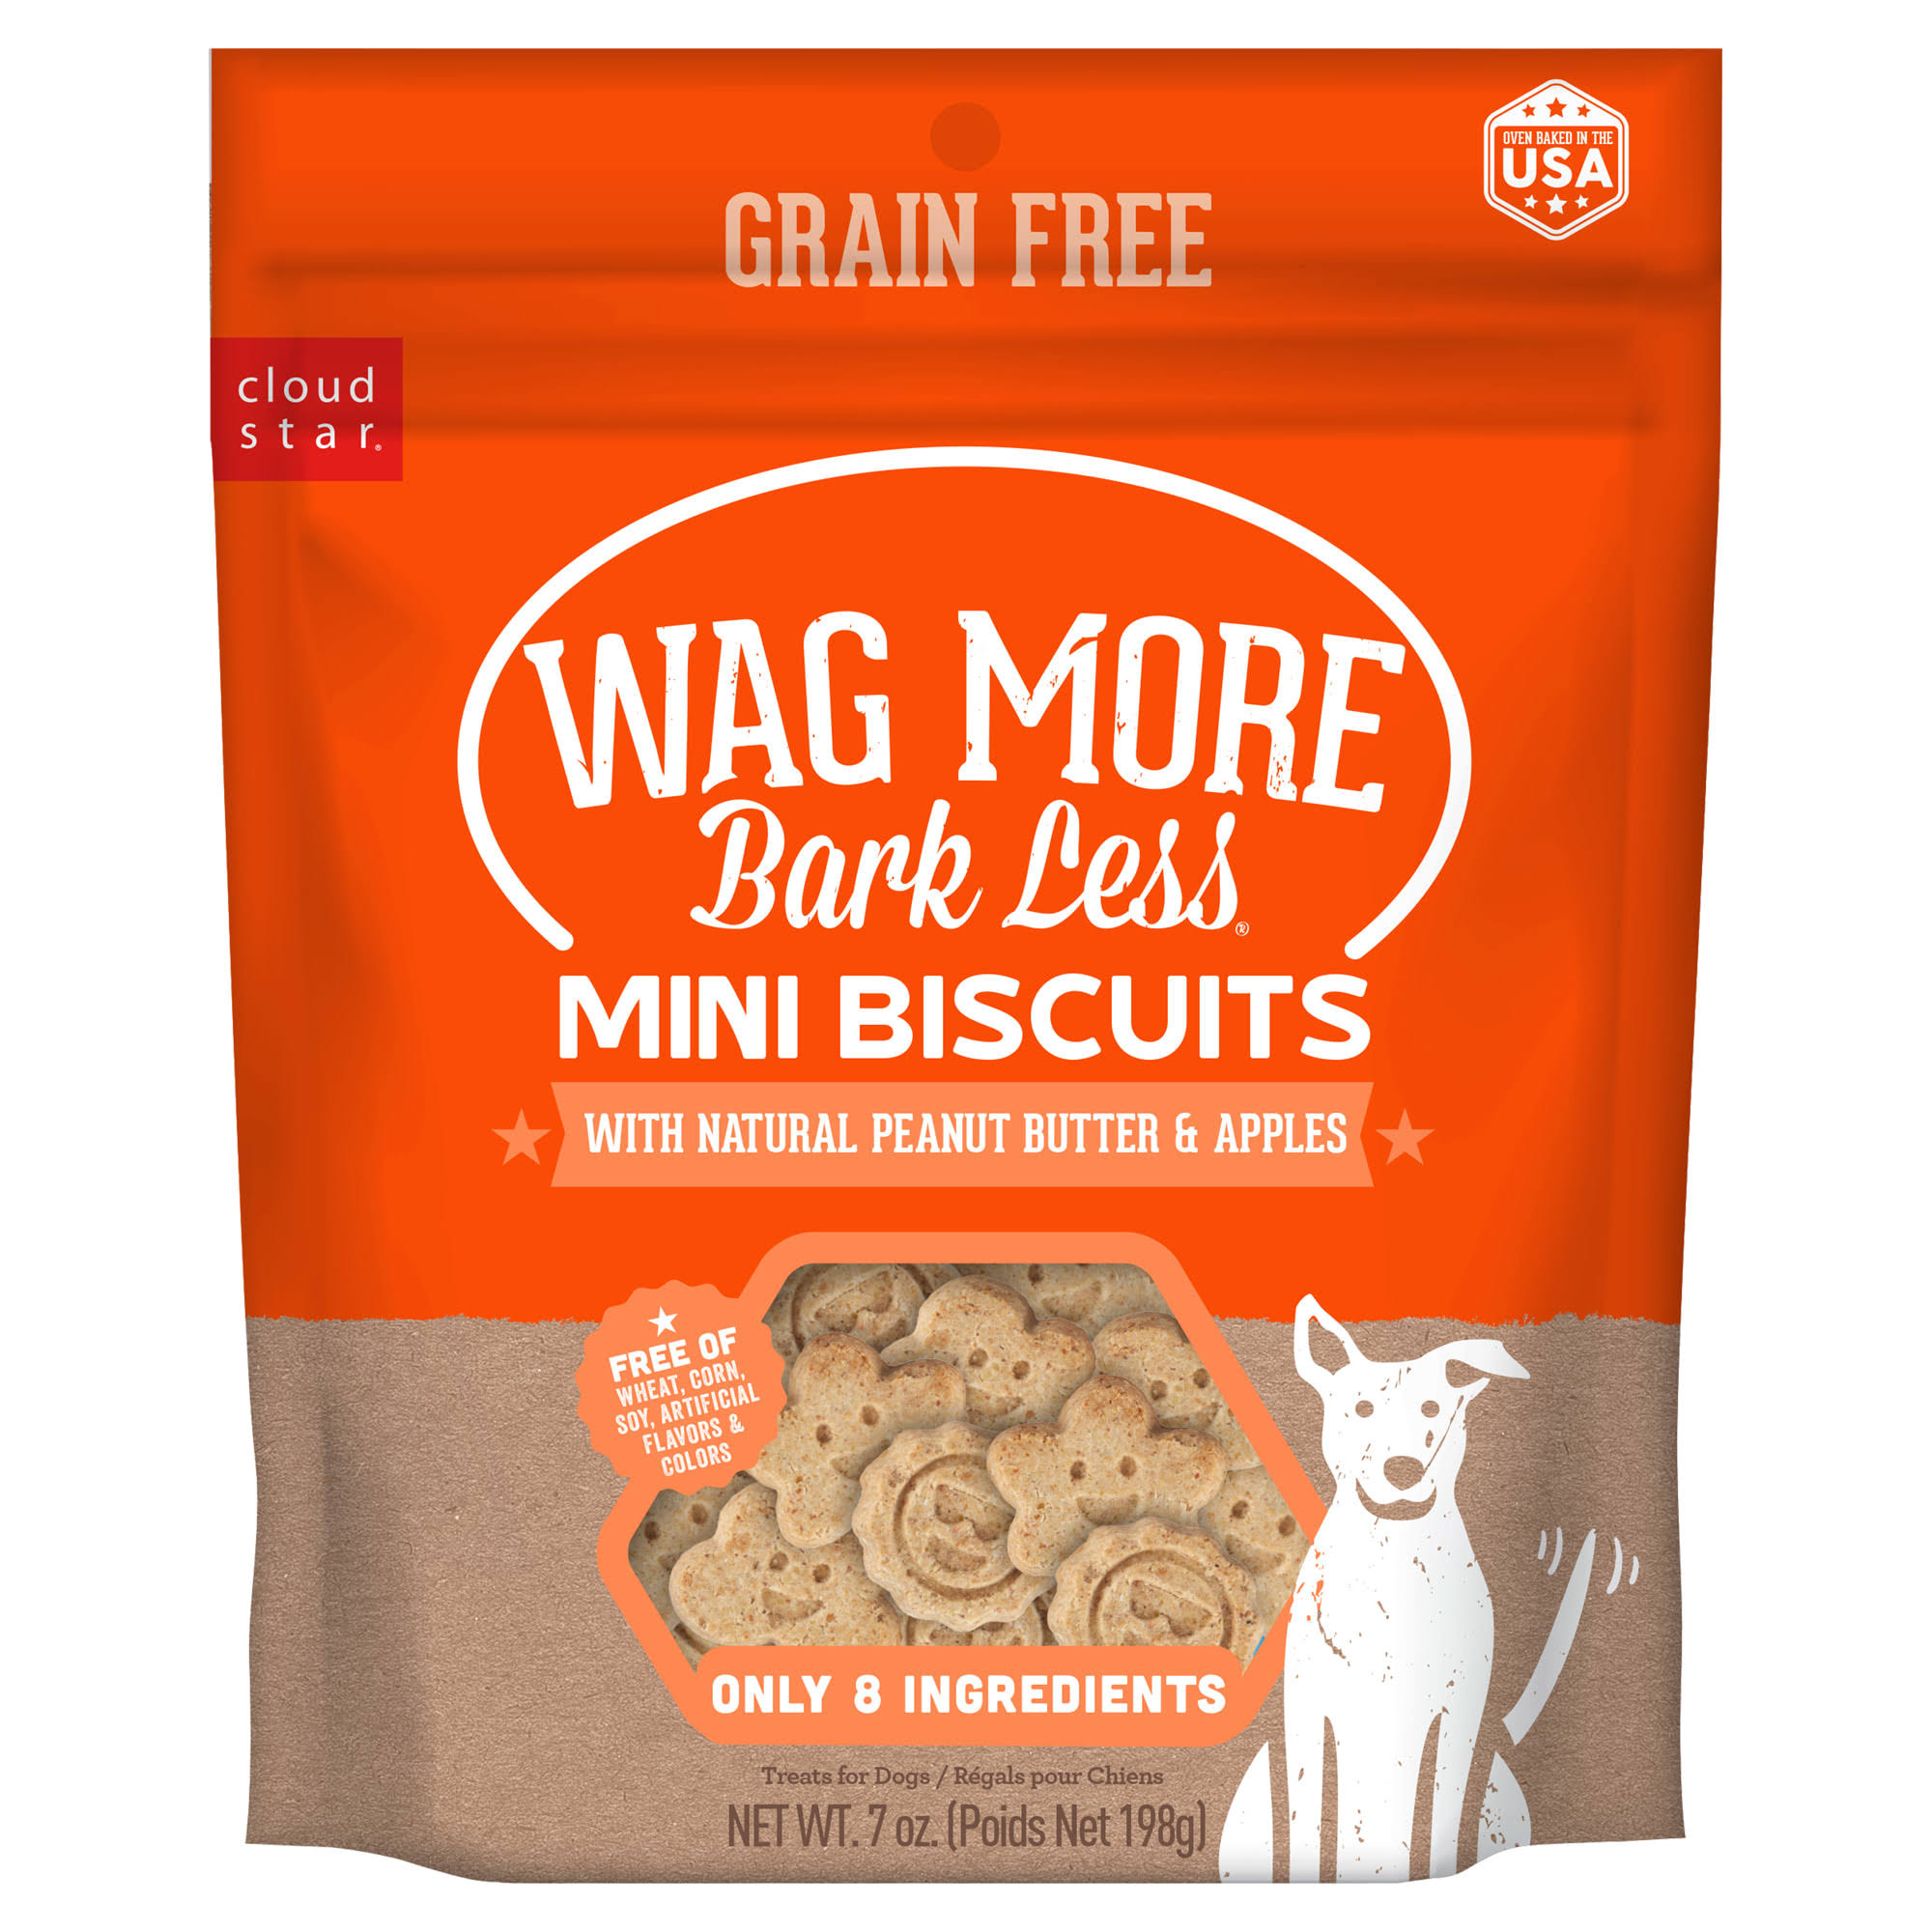 Cloud Star Wag More Bark Less Mini Biscuits Peanut Butter & Apples Grain-Free Dog Treats, 7-oz